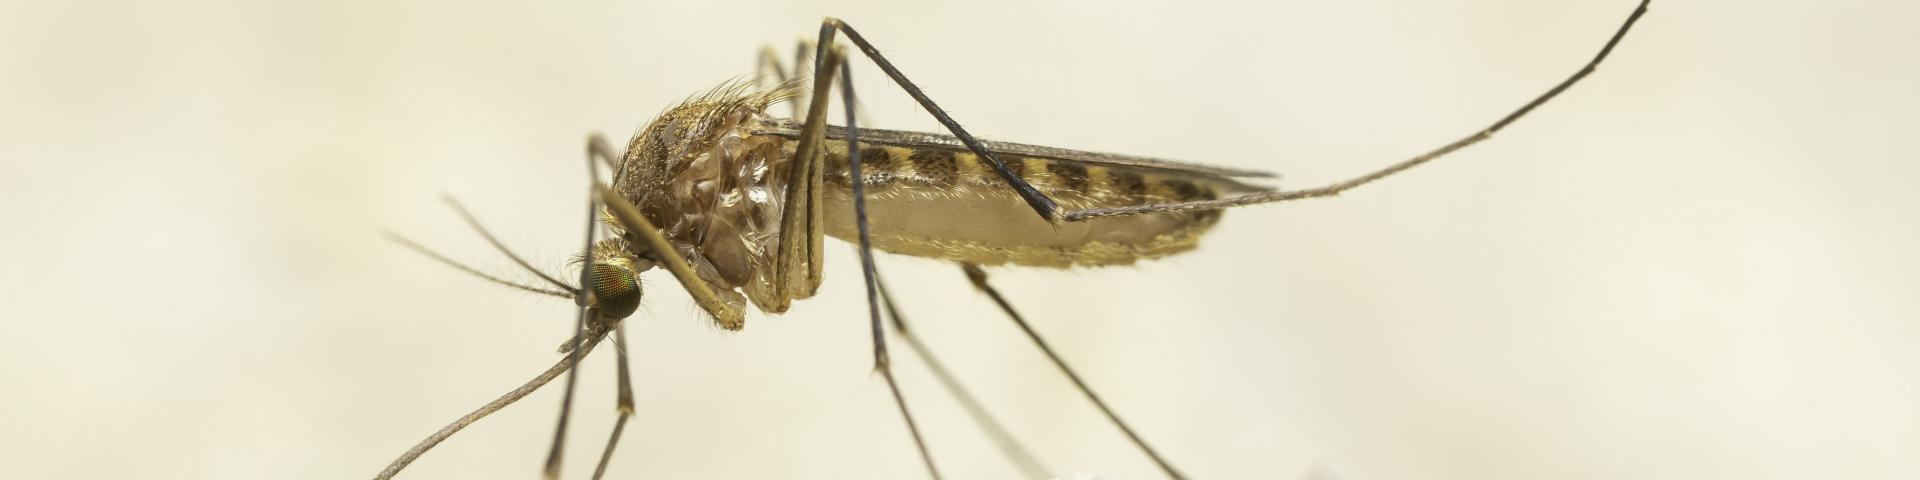 De meest voorkomende mug is de gewone huissteekmug (Culex pipiens)